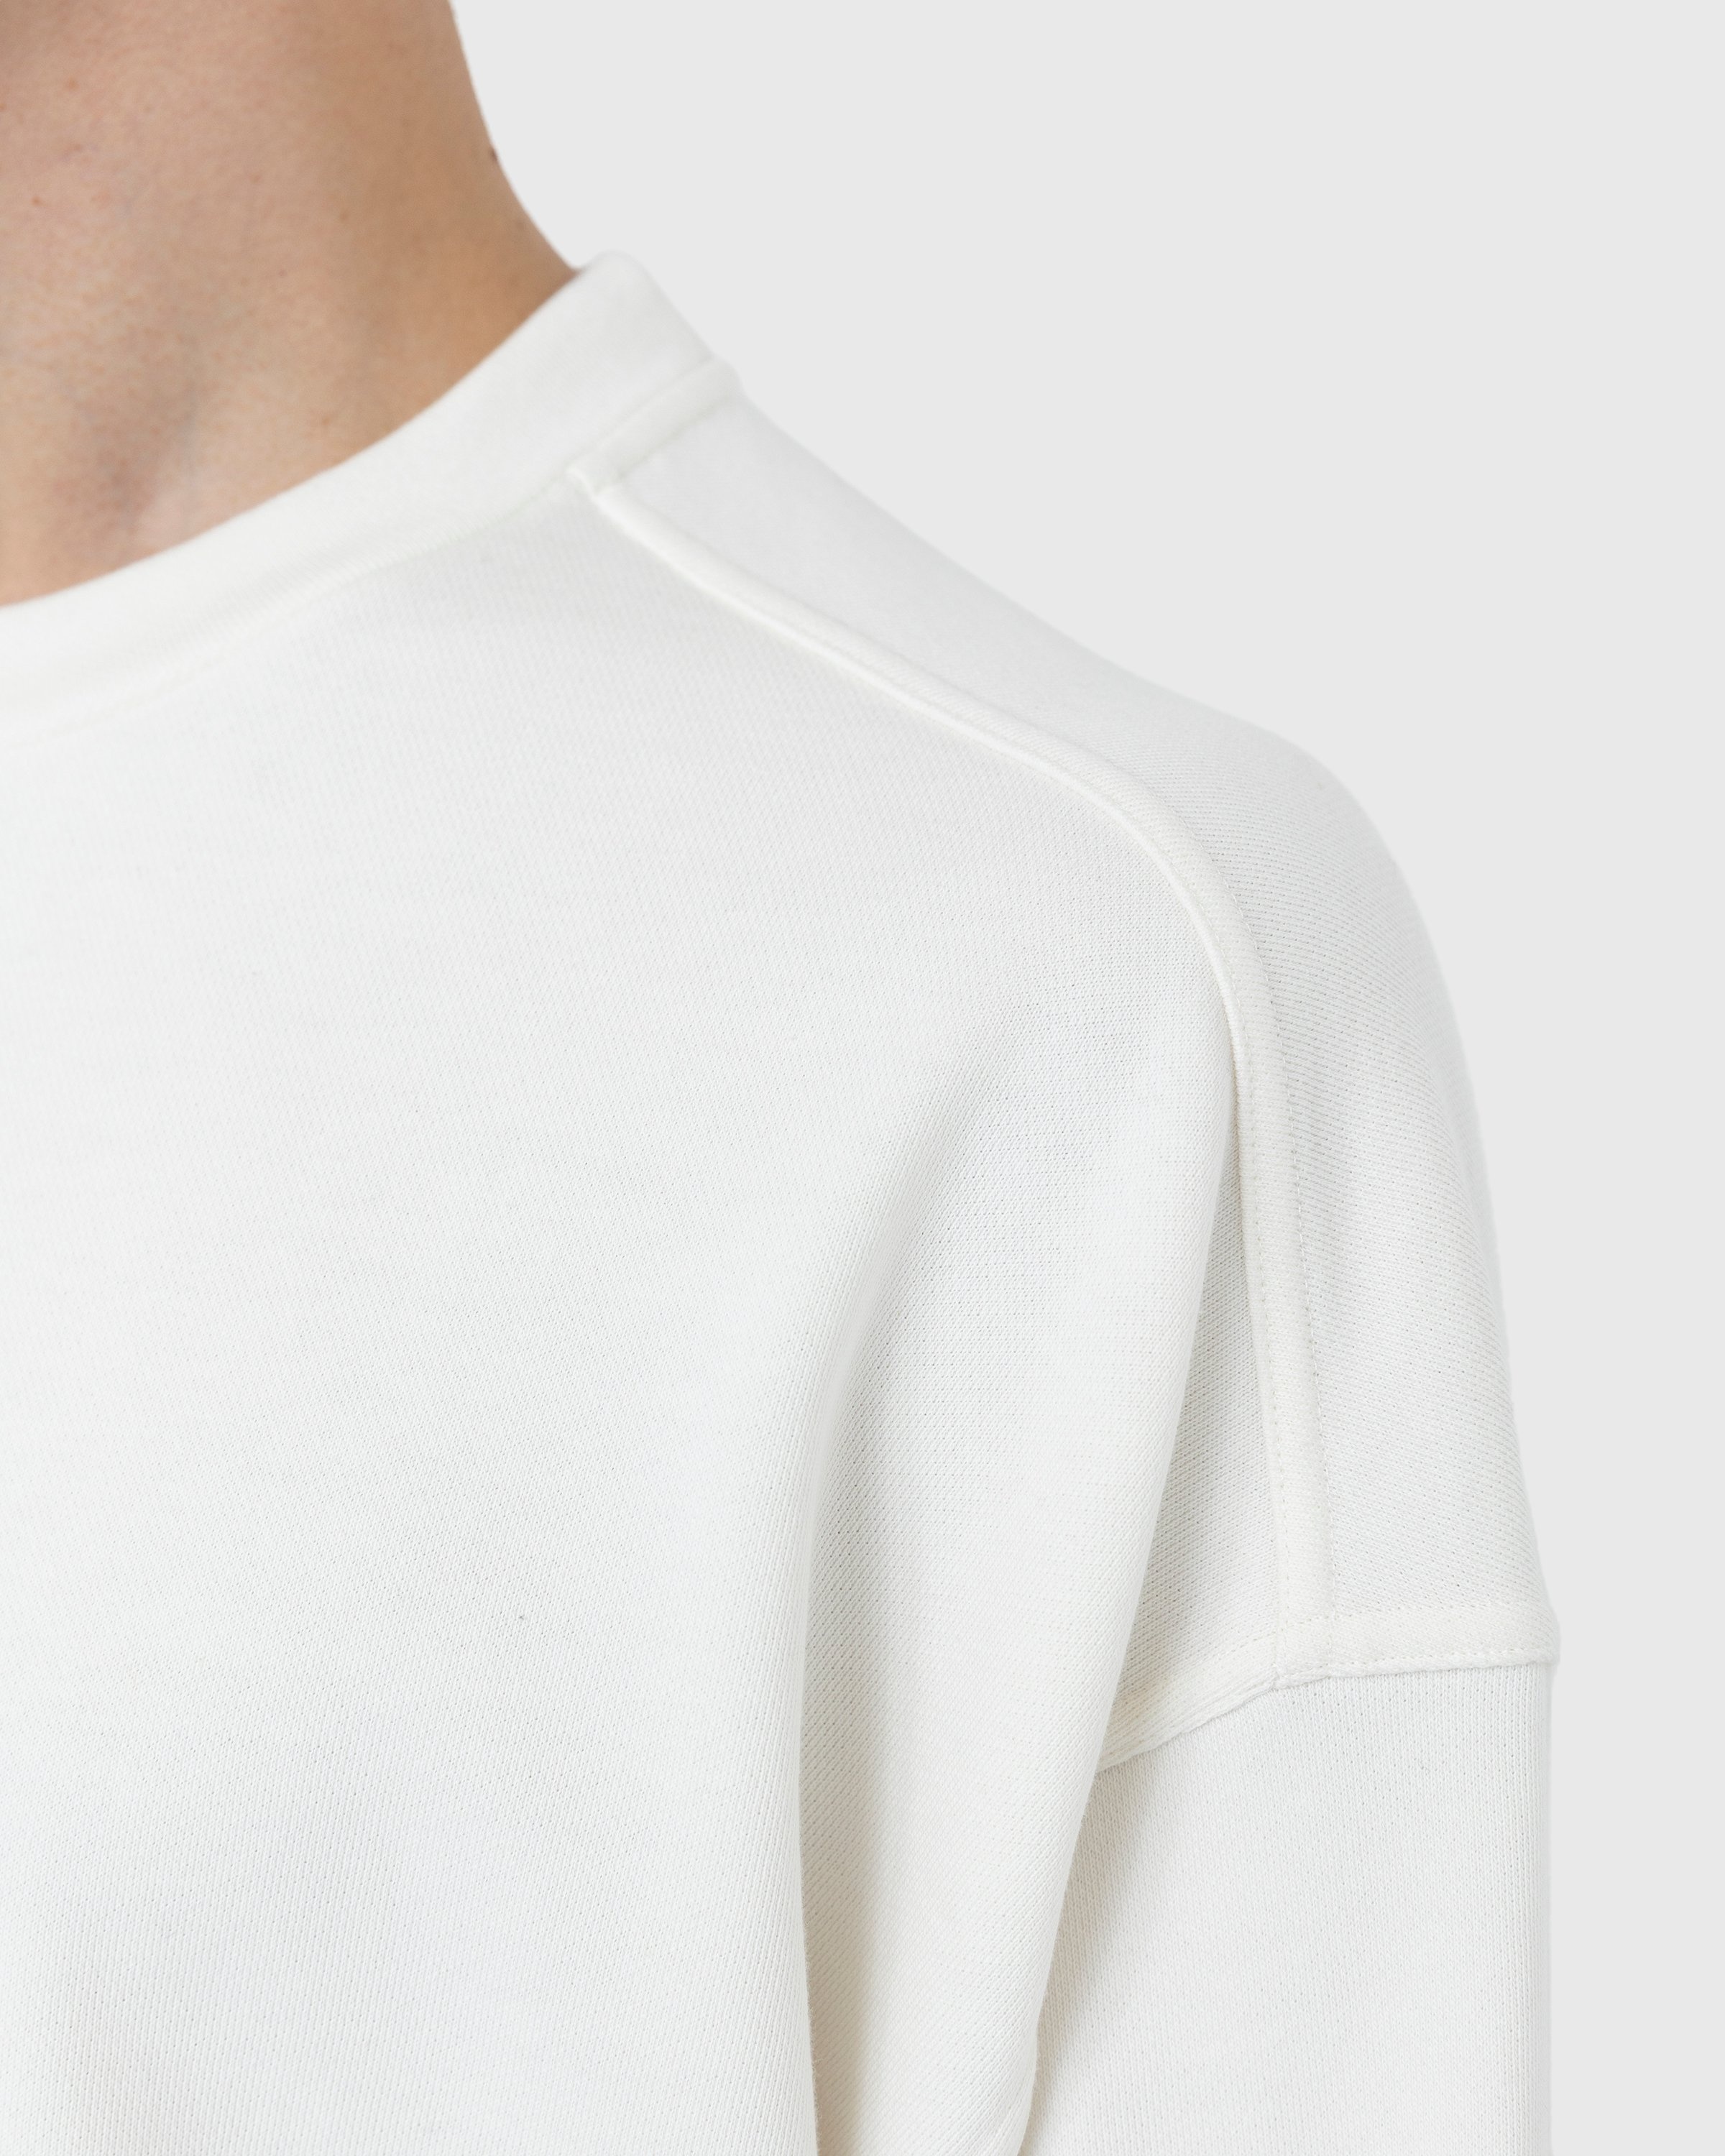 Jil Sander – Logo Sweatshirt Beige - Sweatshirts - Beige - Image 3